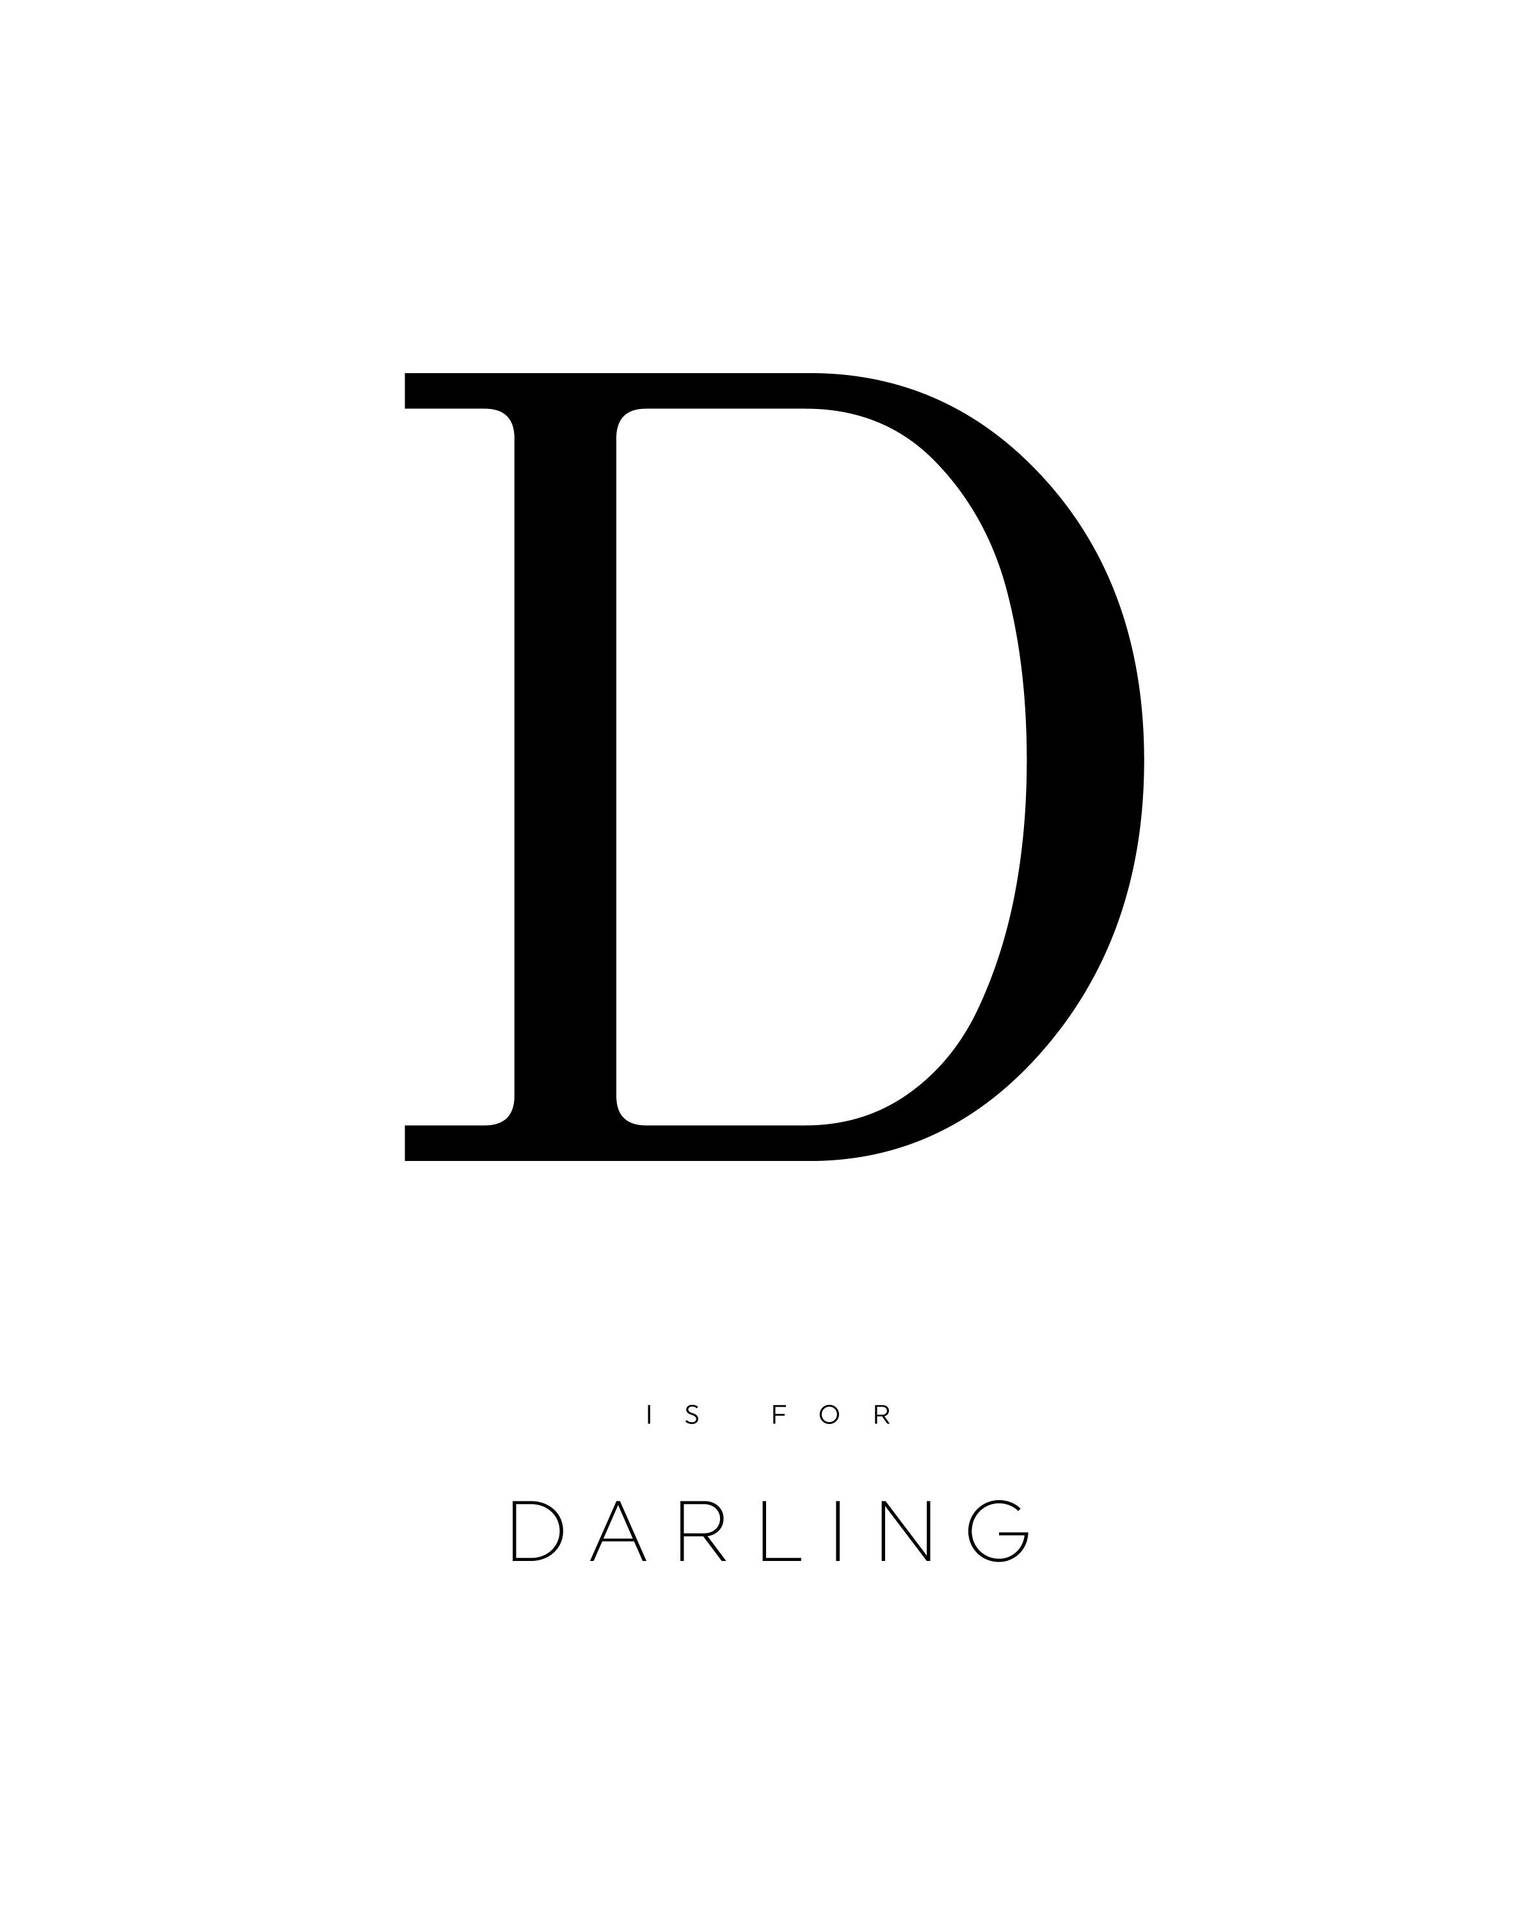 Letter D For Darling Wallpaper